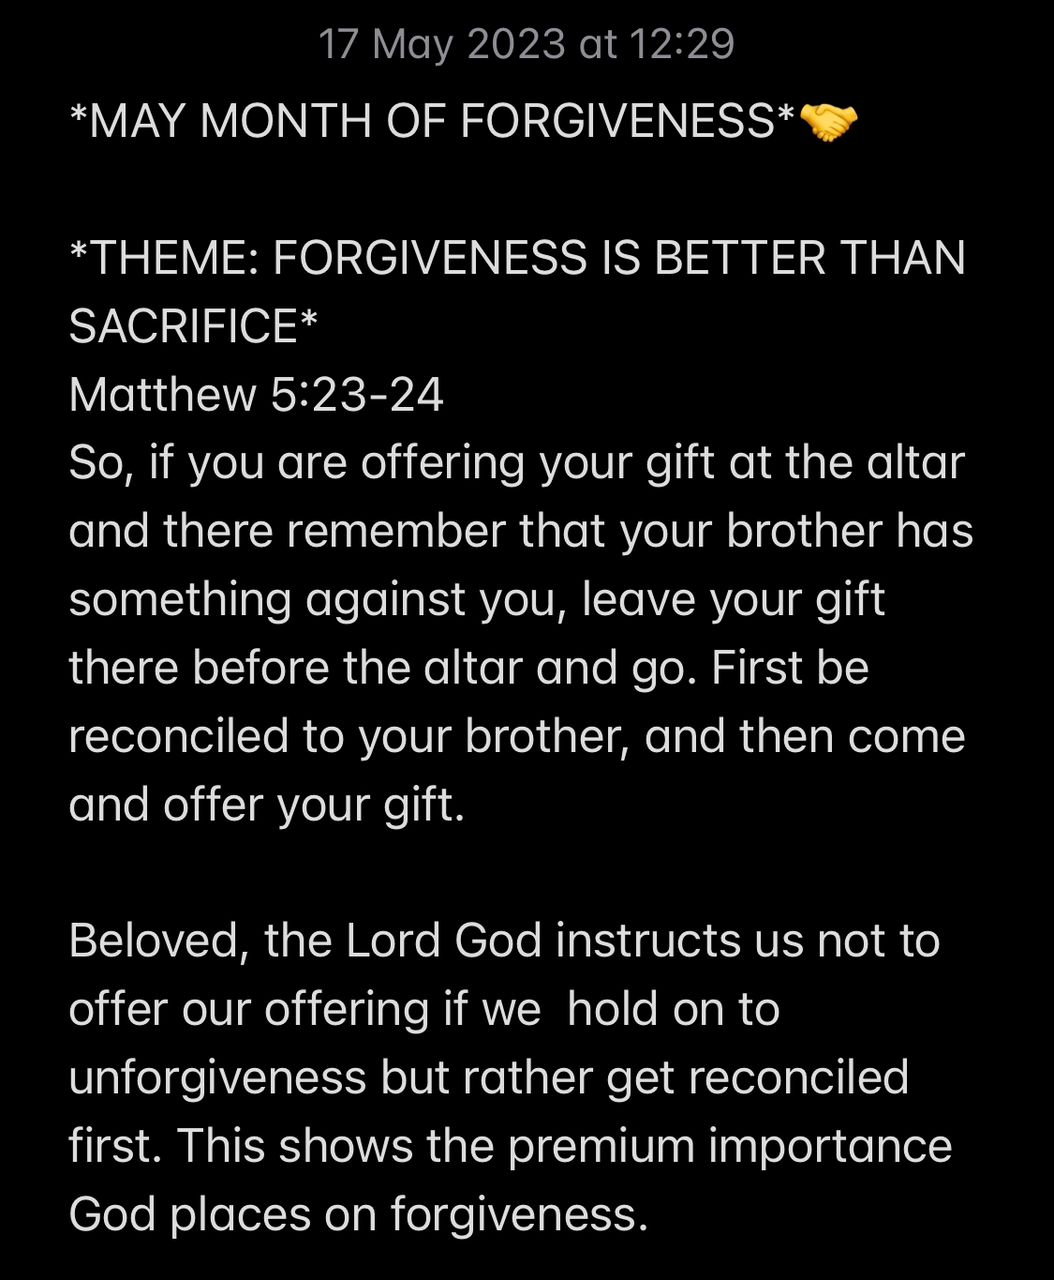 FORGIVENESS PRECEDES SACRIFICE